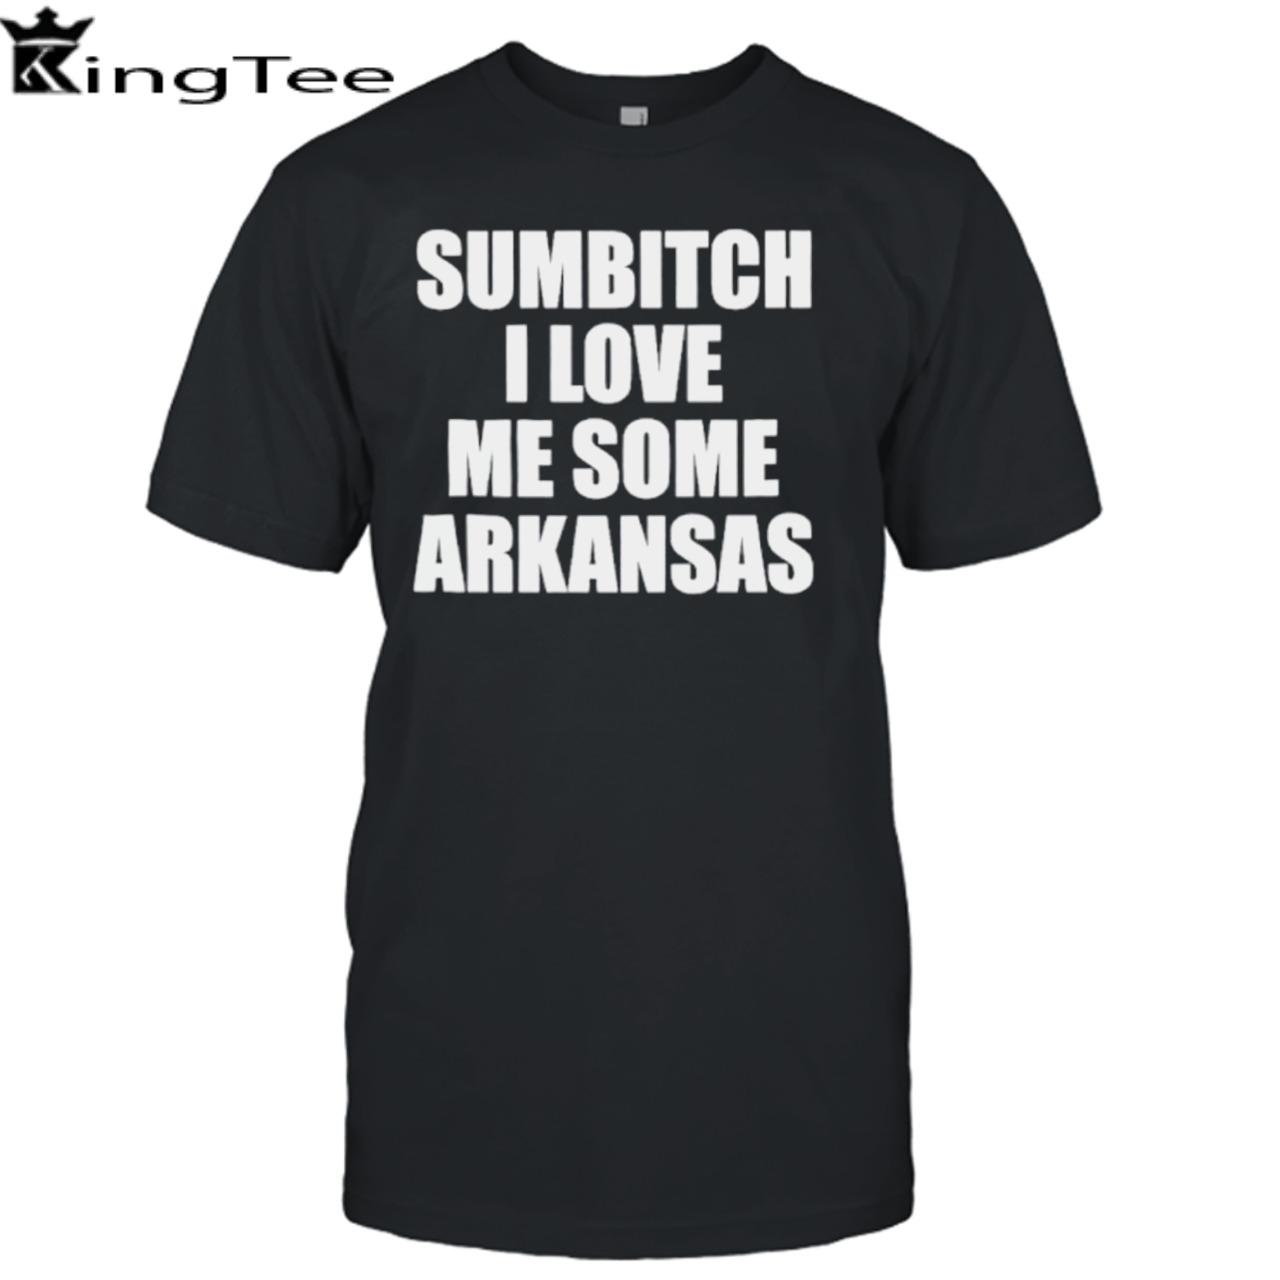 Sumbitch I love me some Arkansas shirt